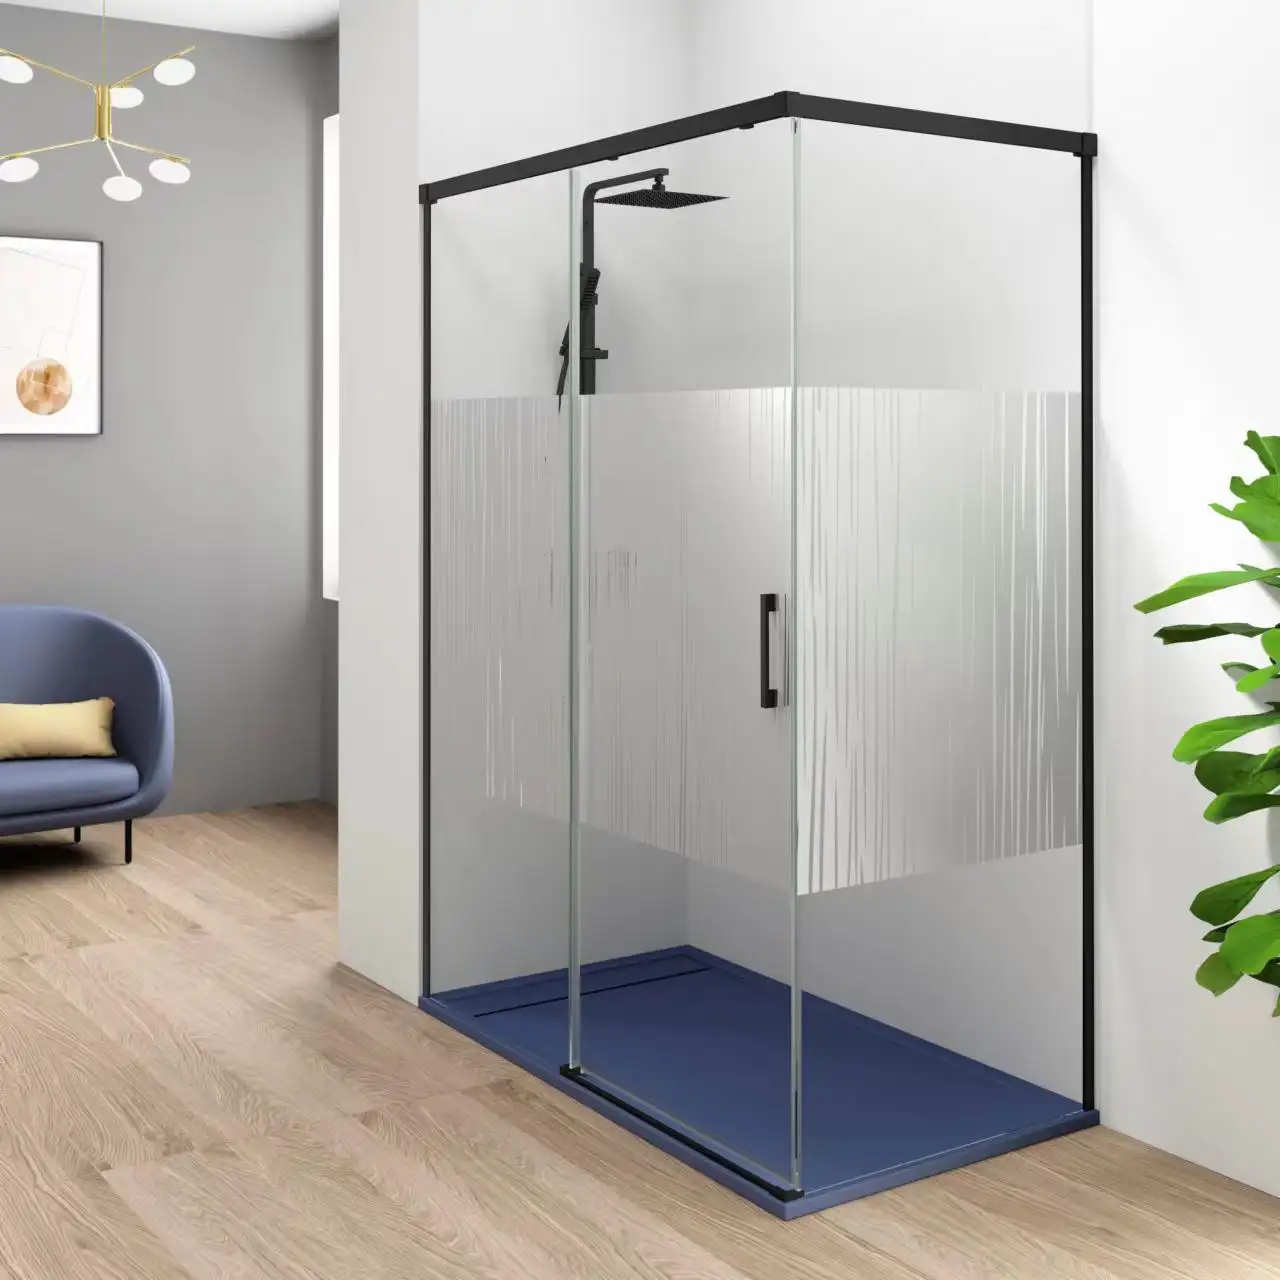 Cabina de ducha esquinera moderna, para baño, color negro